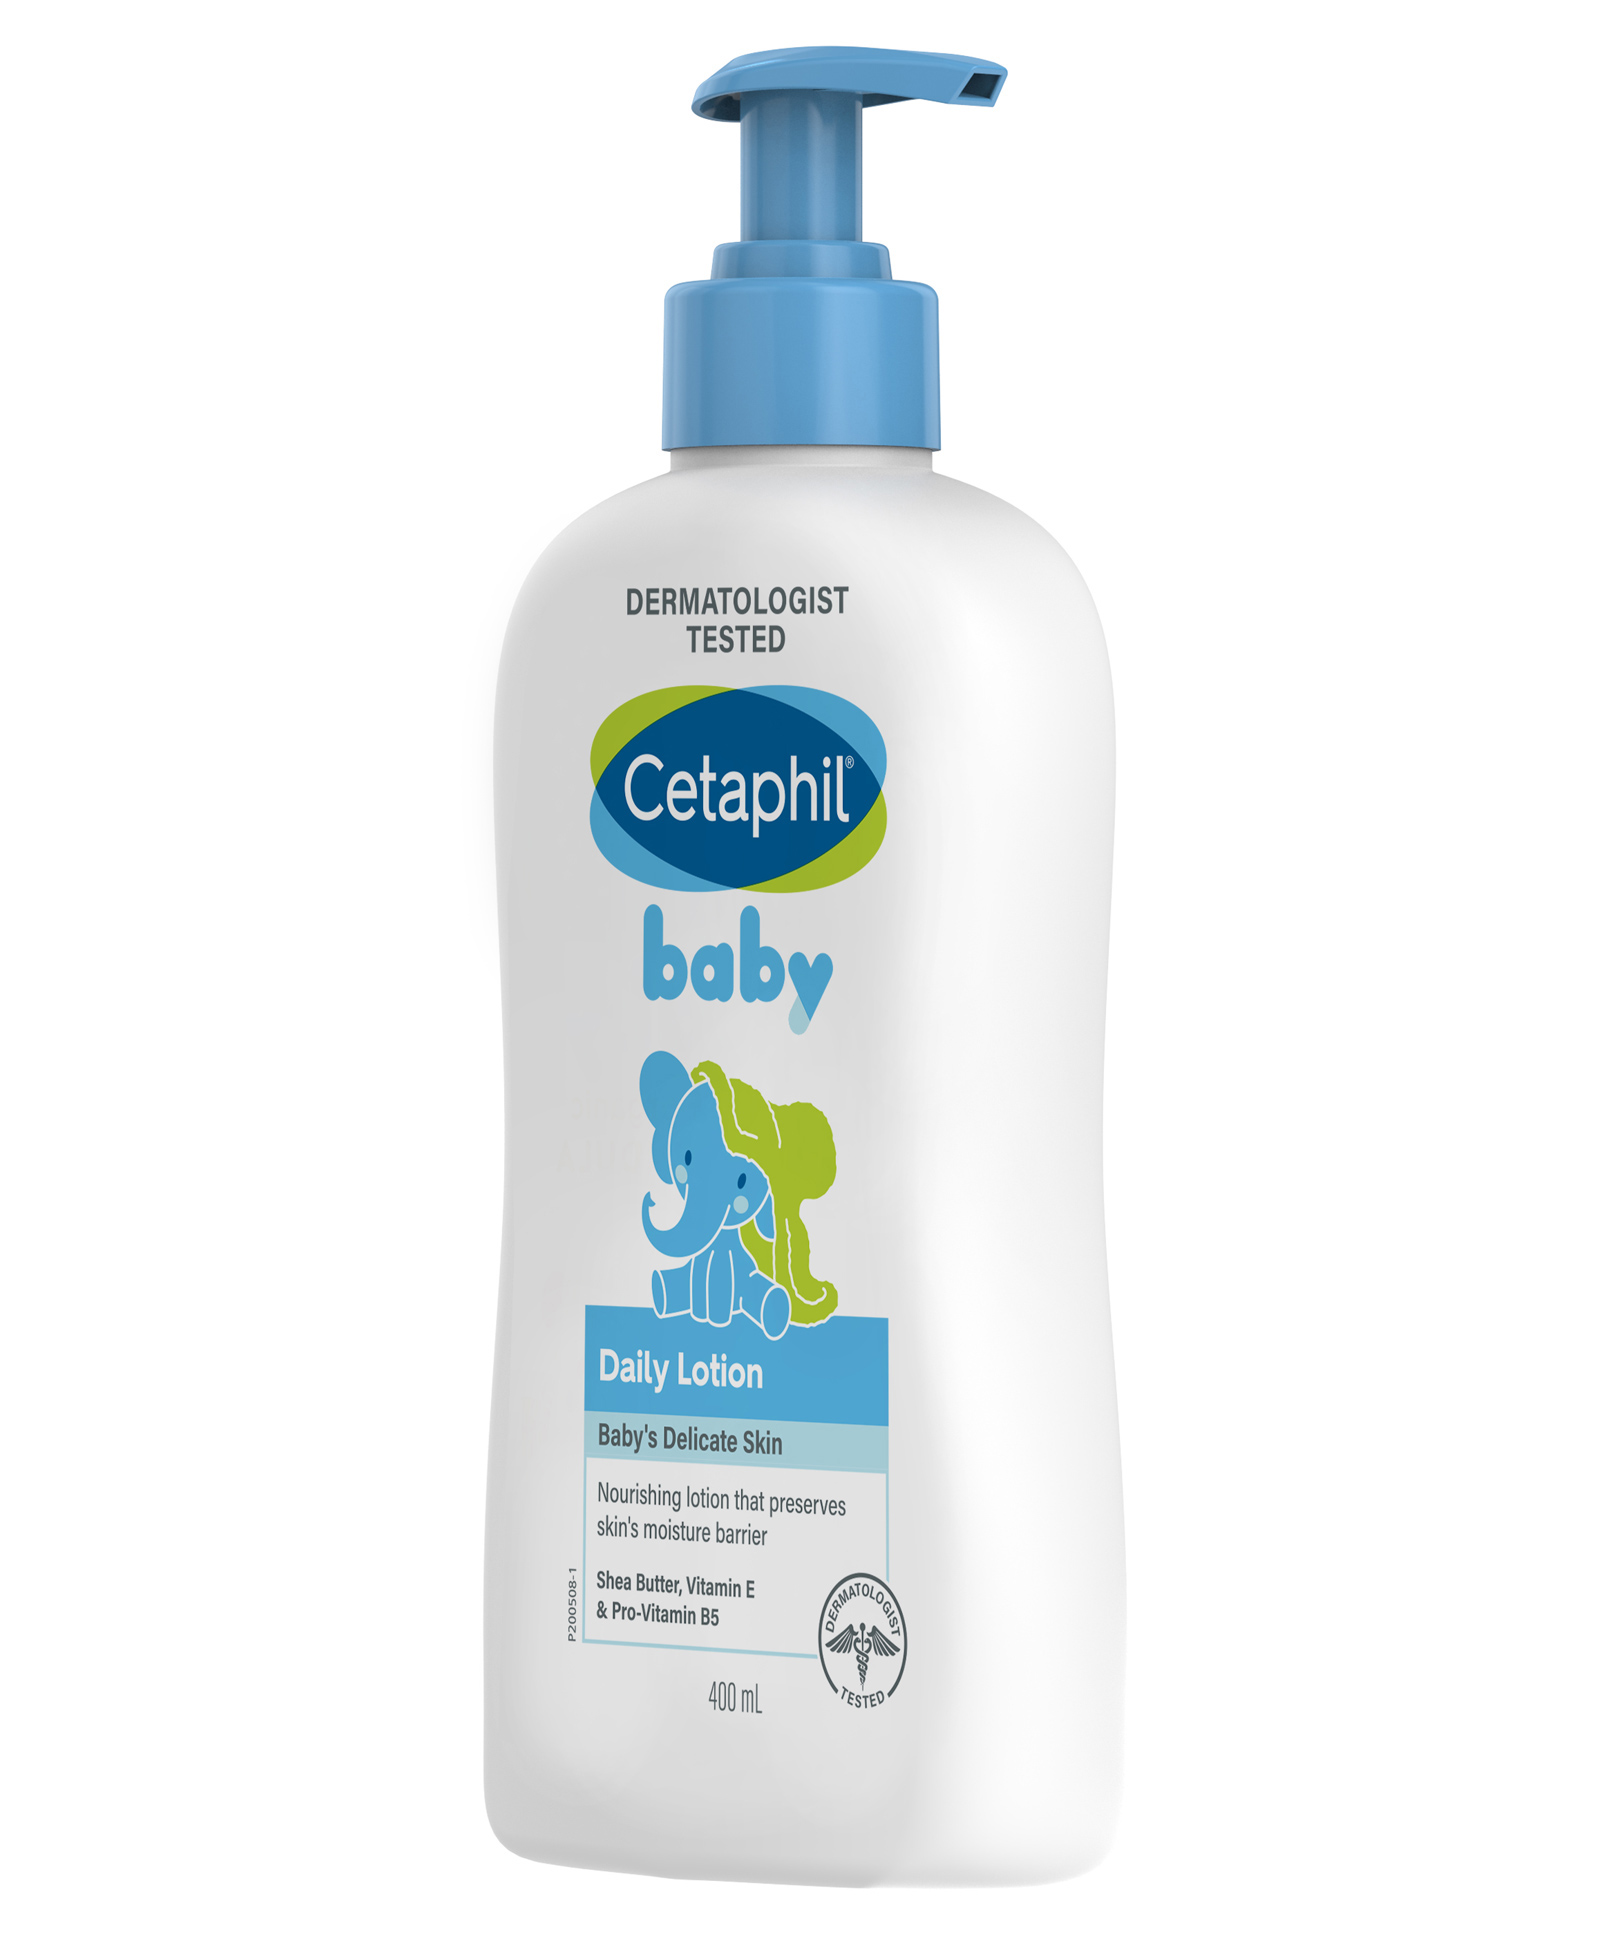 cetaphil baby lotion 400ml price